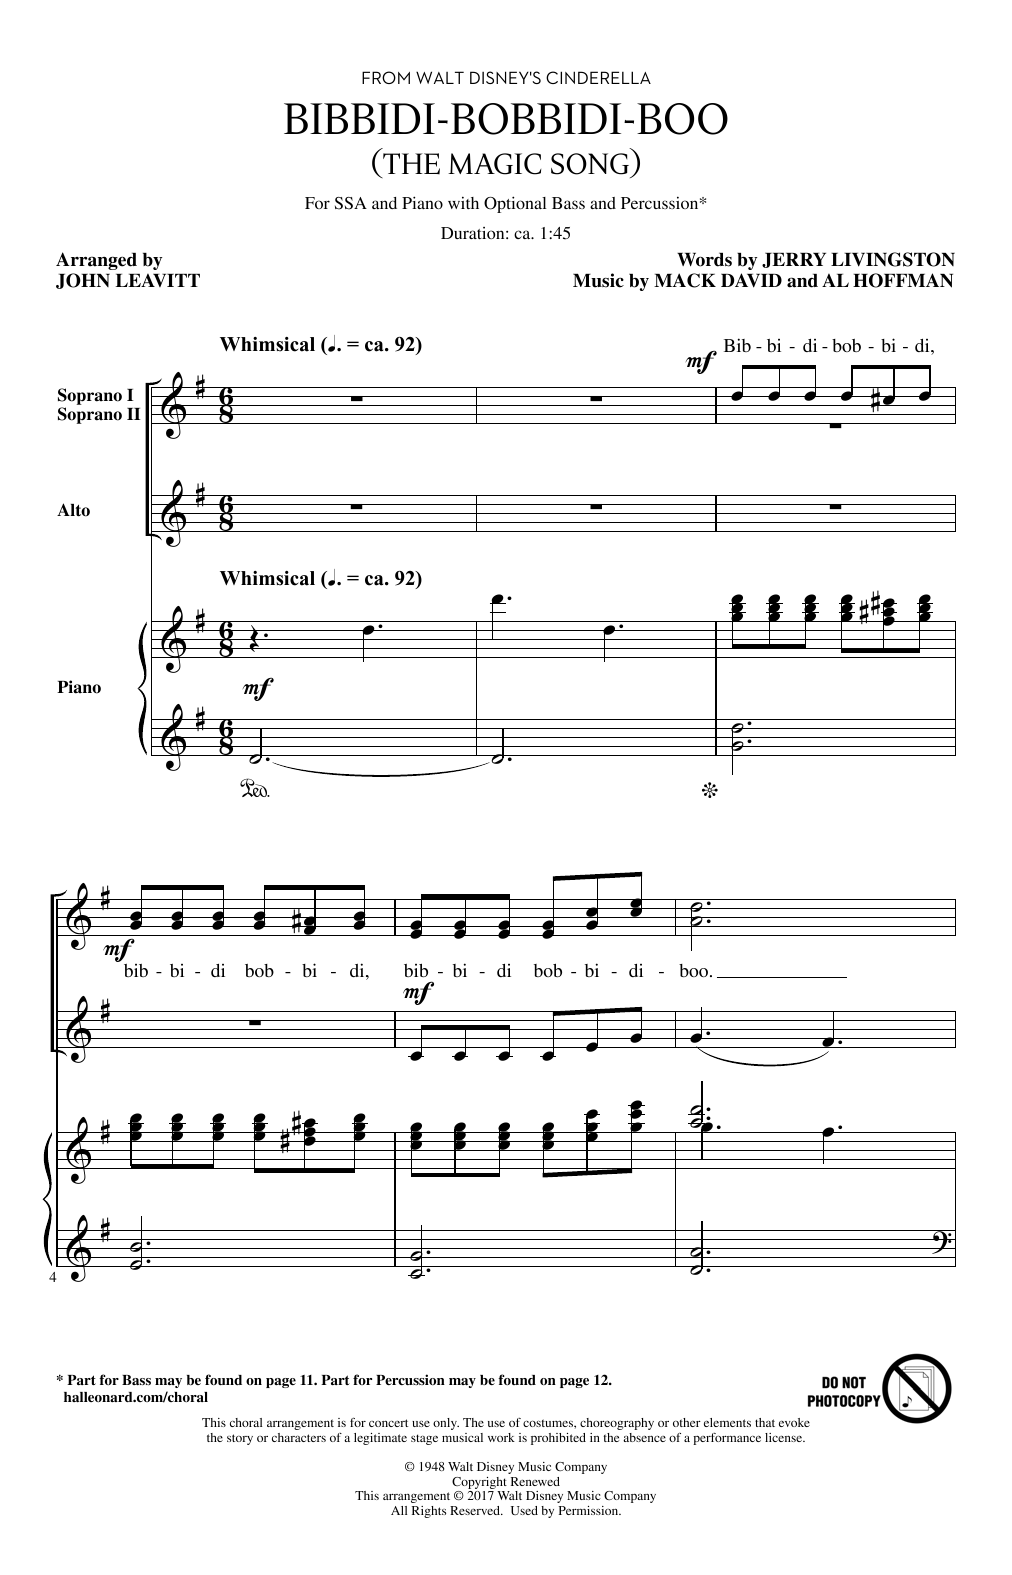 Download John Leavitt Bibbidi-Bobbidi-Boo (The Magic Song) Sheet Music and learn how to play SSA PDF digital score in minutes